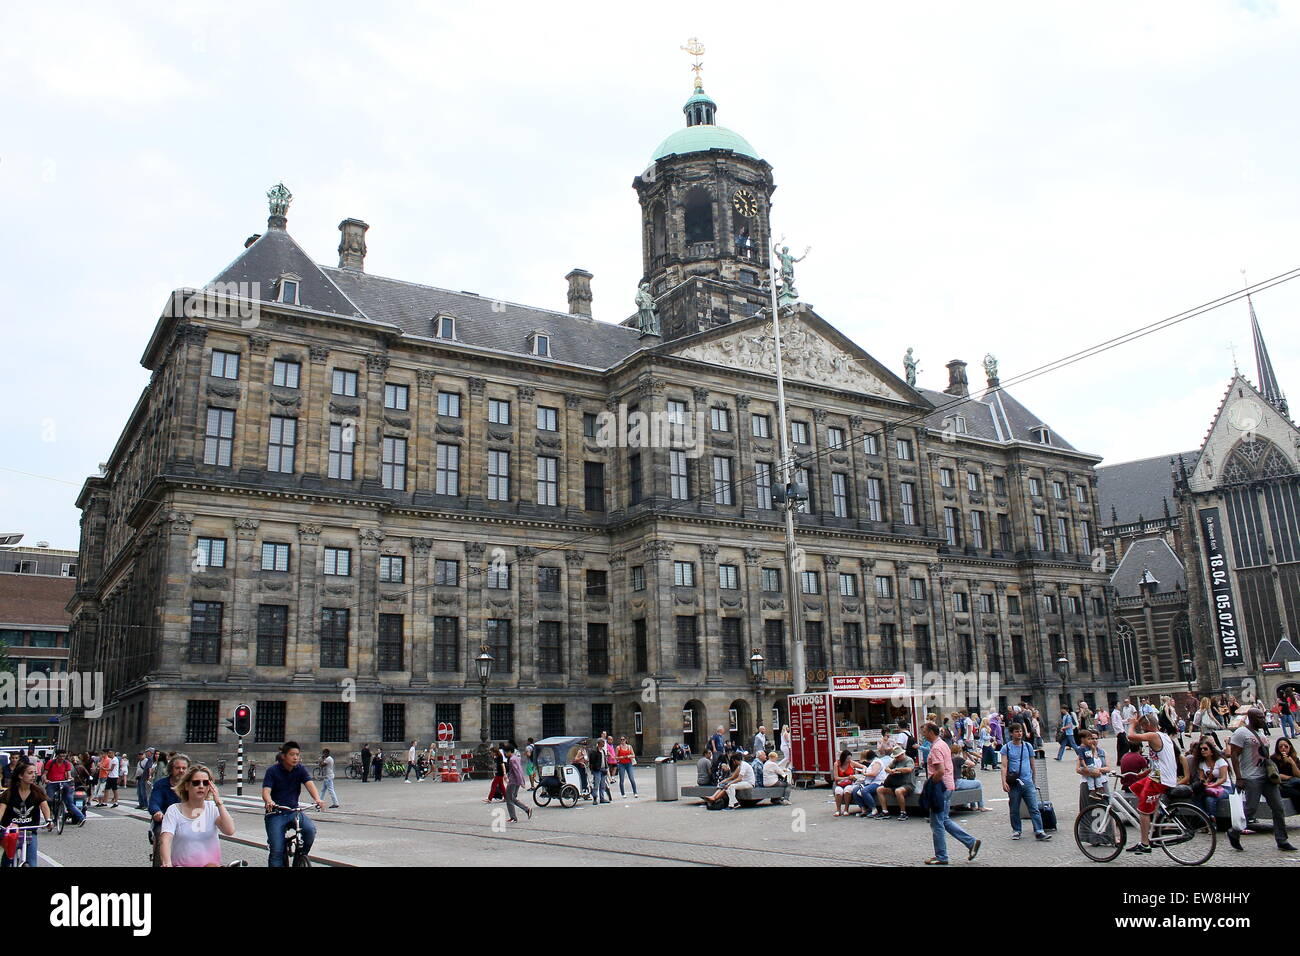 Xvii secolo Paleis op de Dam - Palazzo reale di Amsterdam in piazza Dam Foto Stock